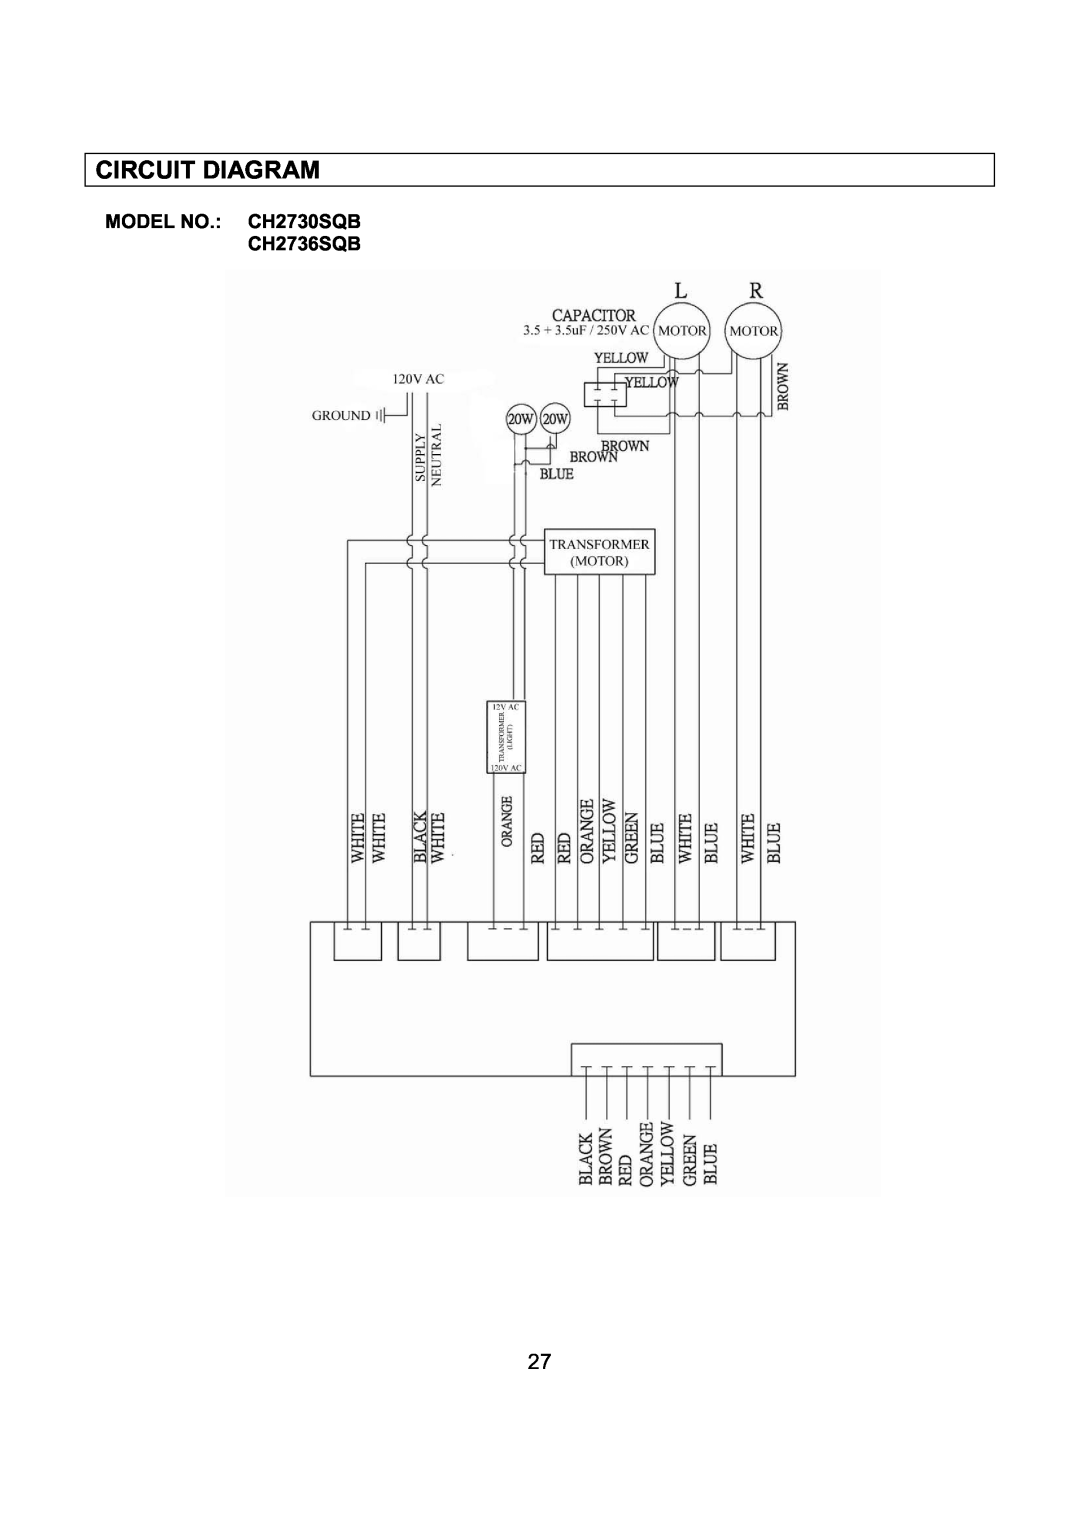 Kobe Range Hoods CH2748SQB, CH2742SQB installation instructions Circuit Diagram, MODEL NO. CH2730SQB CH2736SQB 